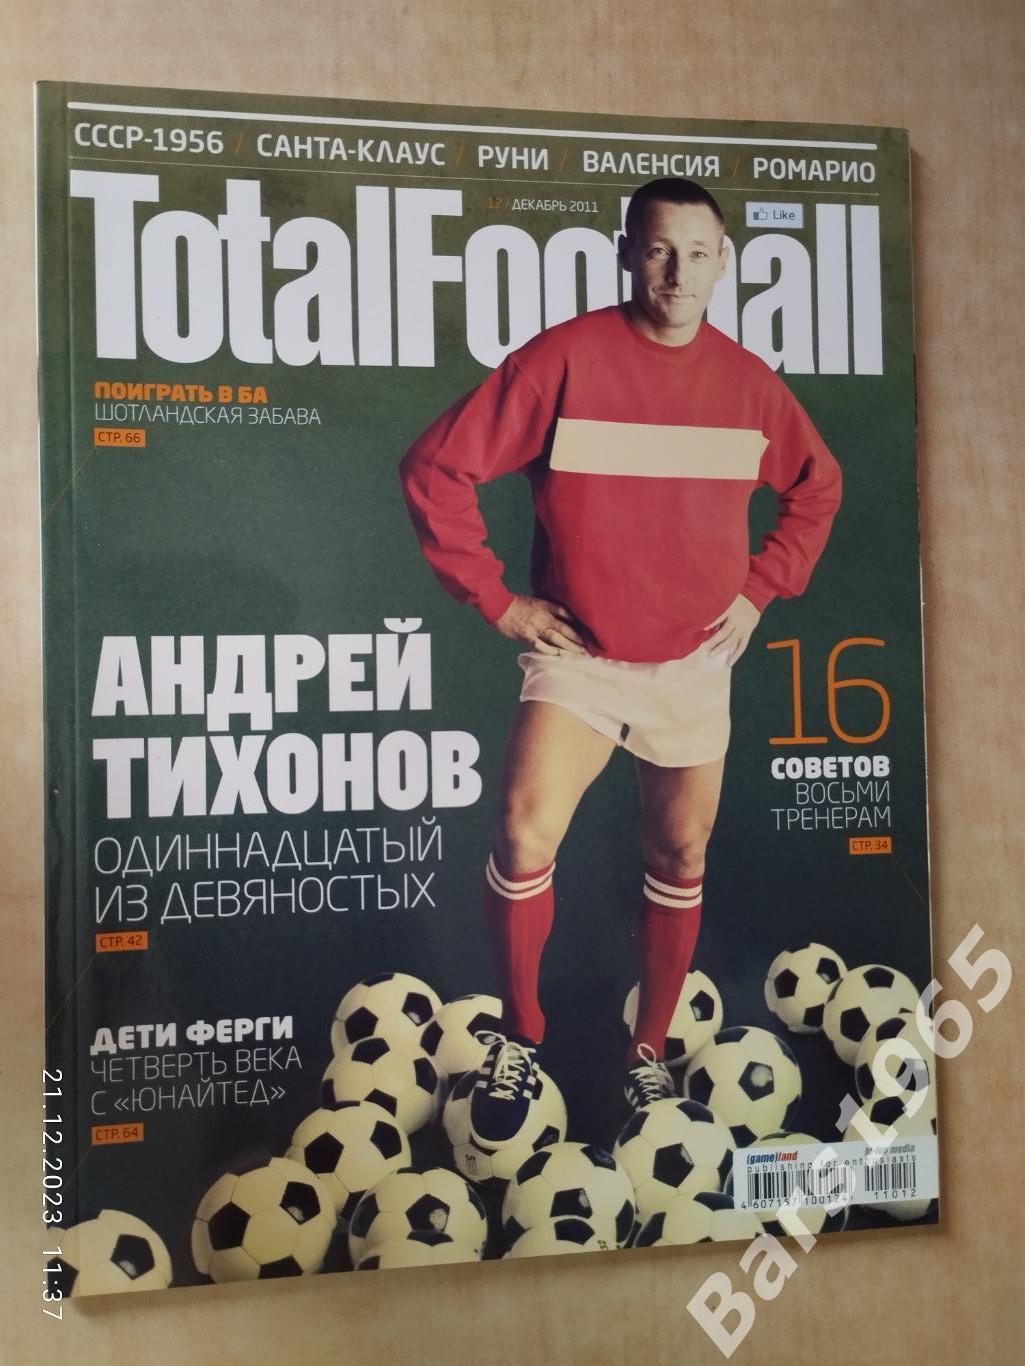 Total Football № 12 (71) 2011 с постером